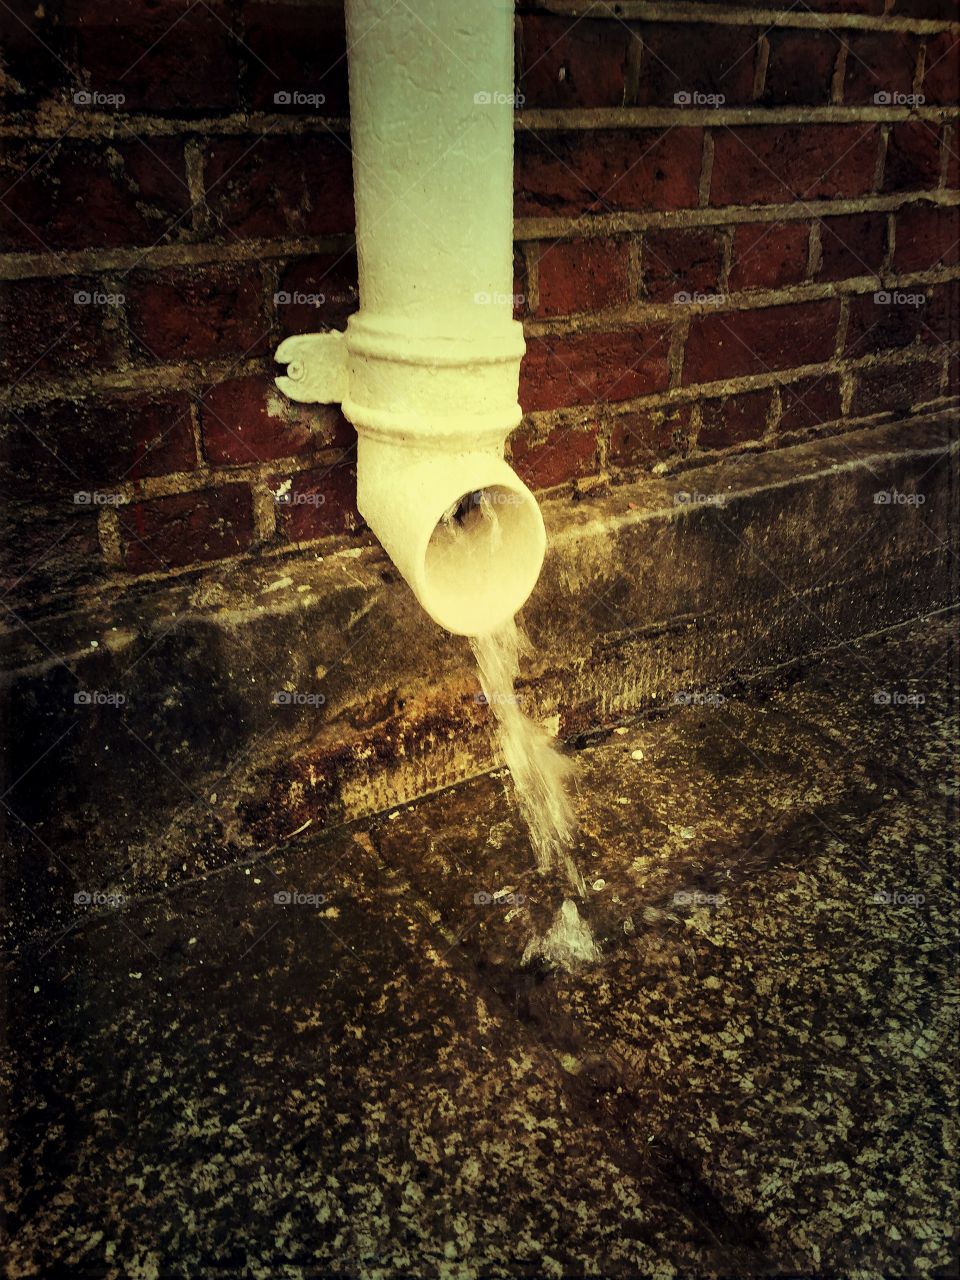 Rainwater and old drainpipe